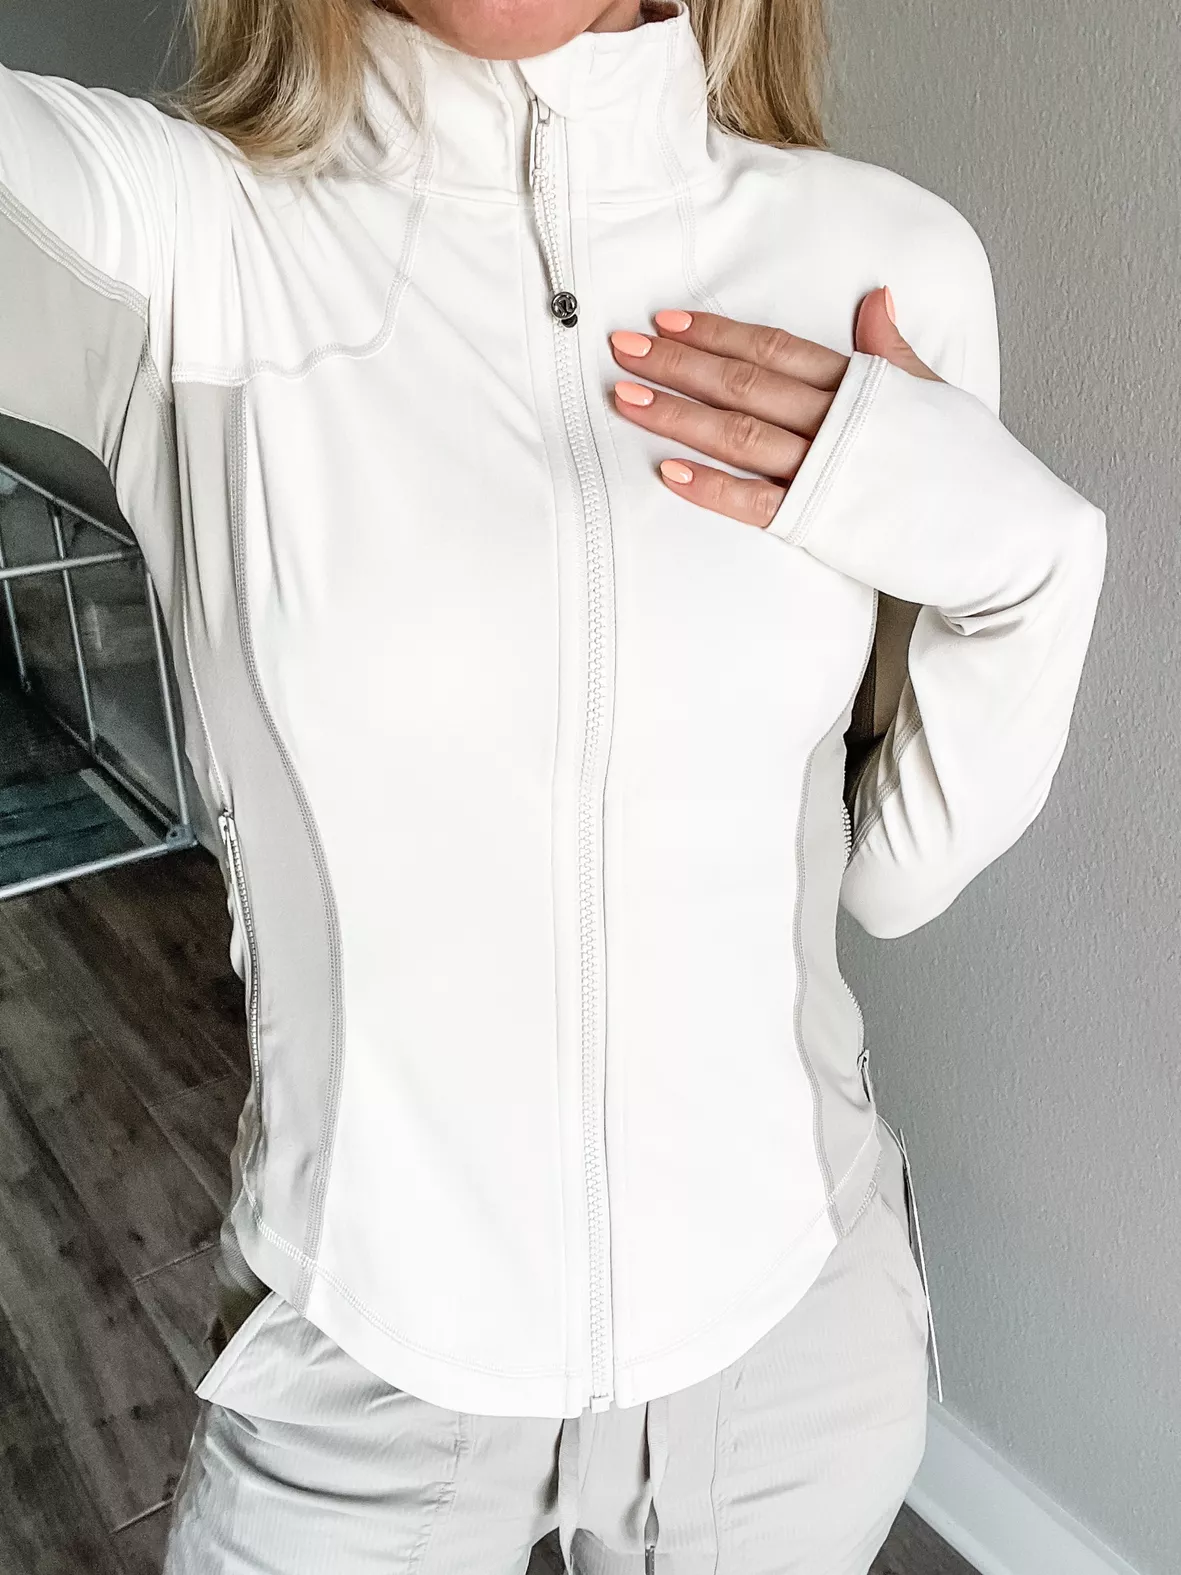 lululemon Align™ Ribbed Bodysuit … curated on LTK